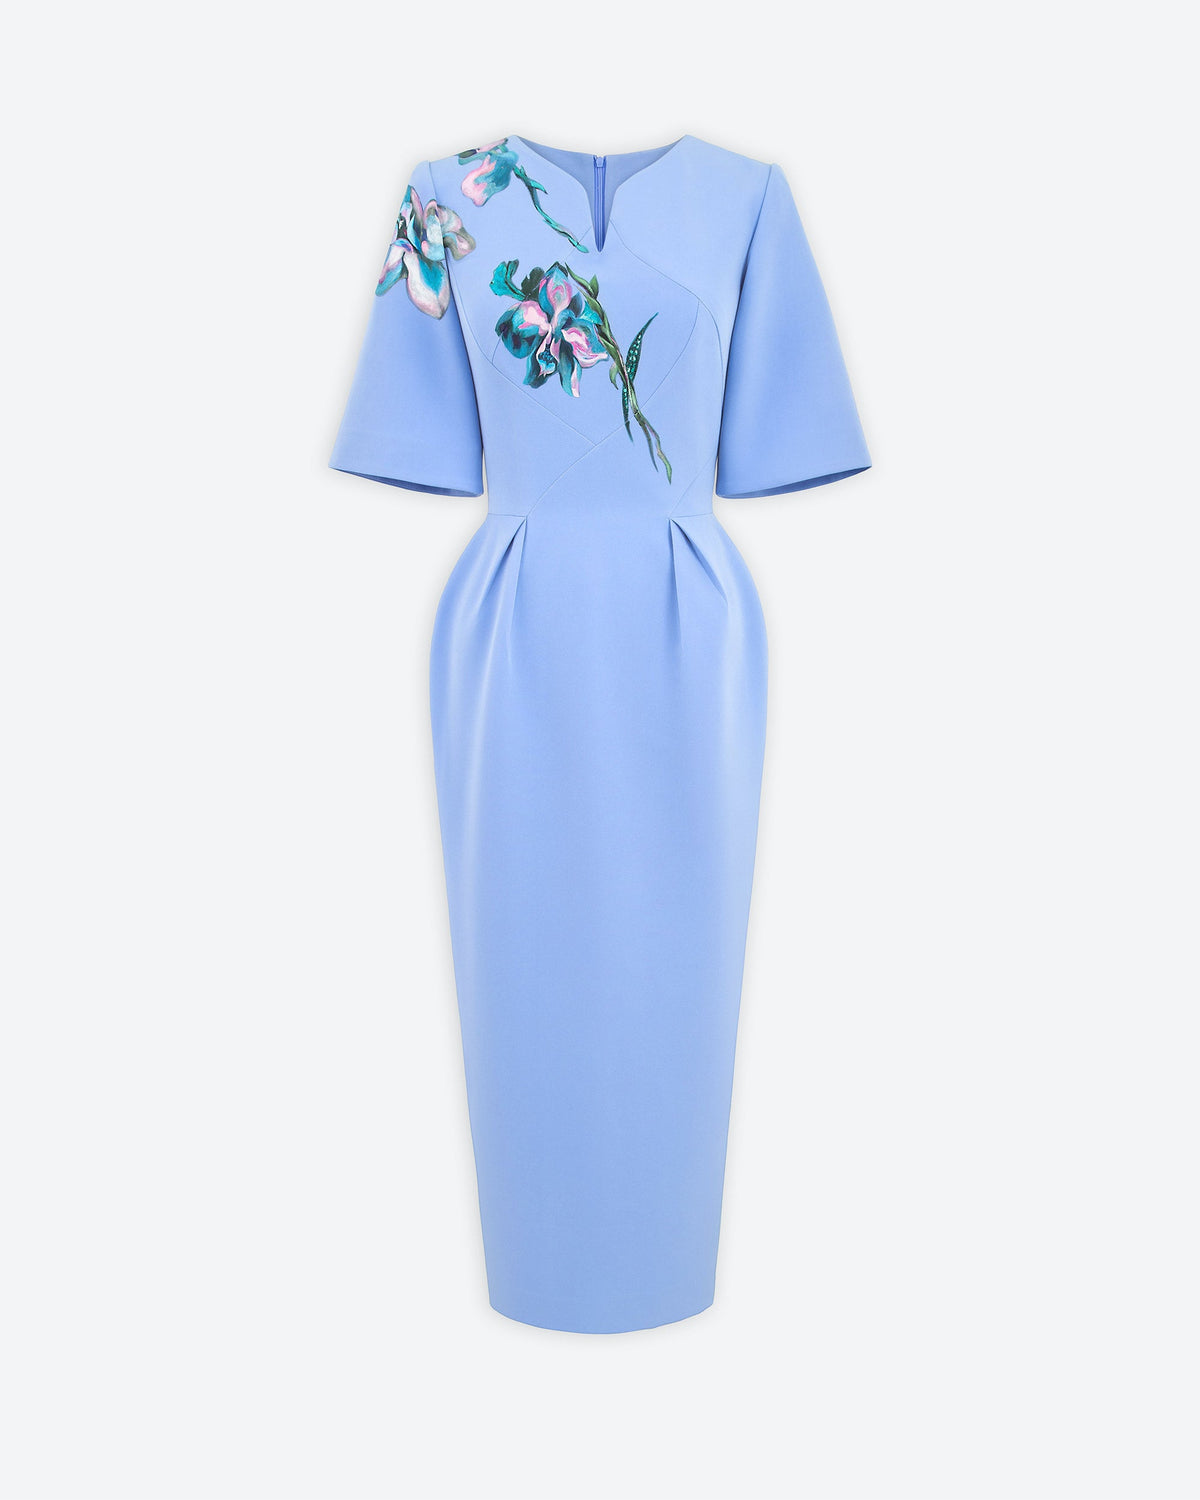 Serenity Blossom - Blue Sky Pegged Dress